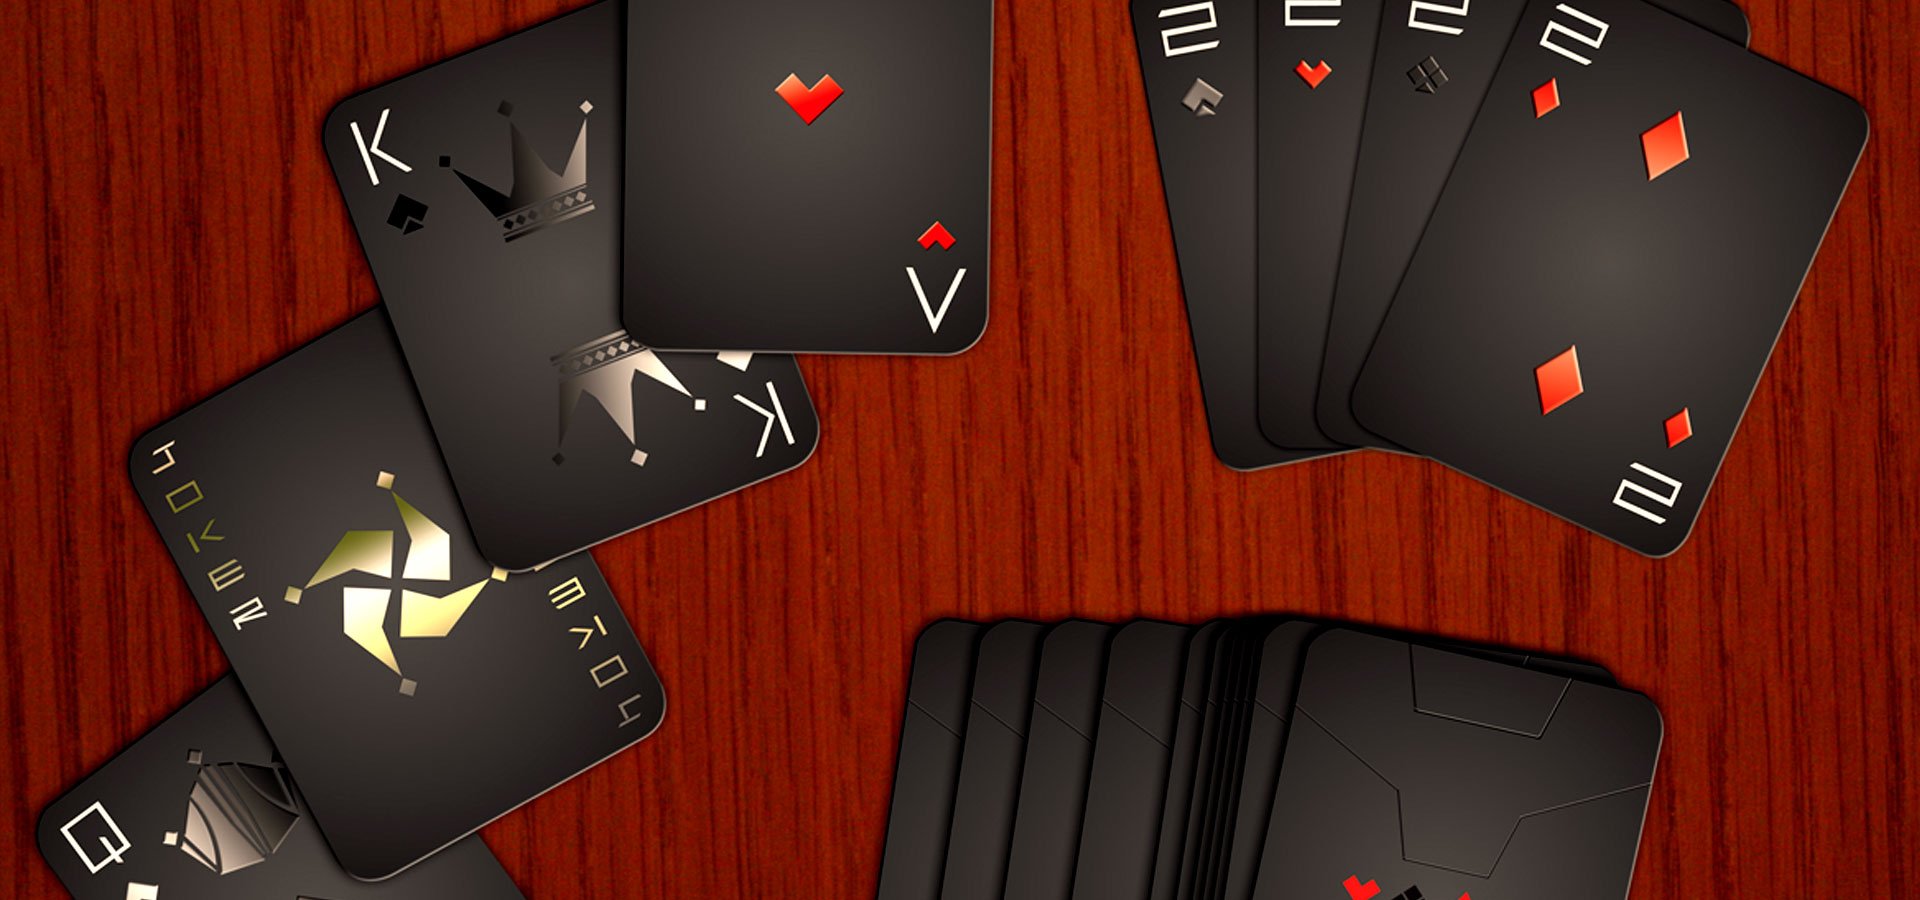 22 Playing Card Designs Free Premium Templates